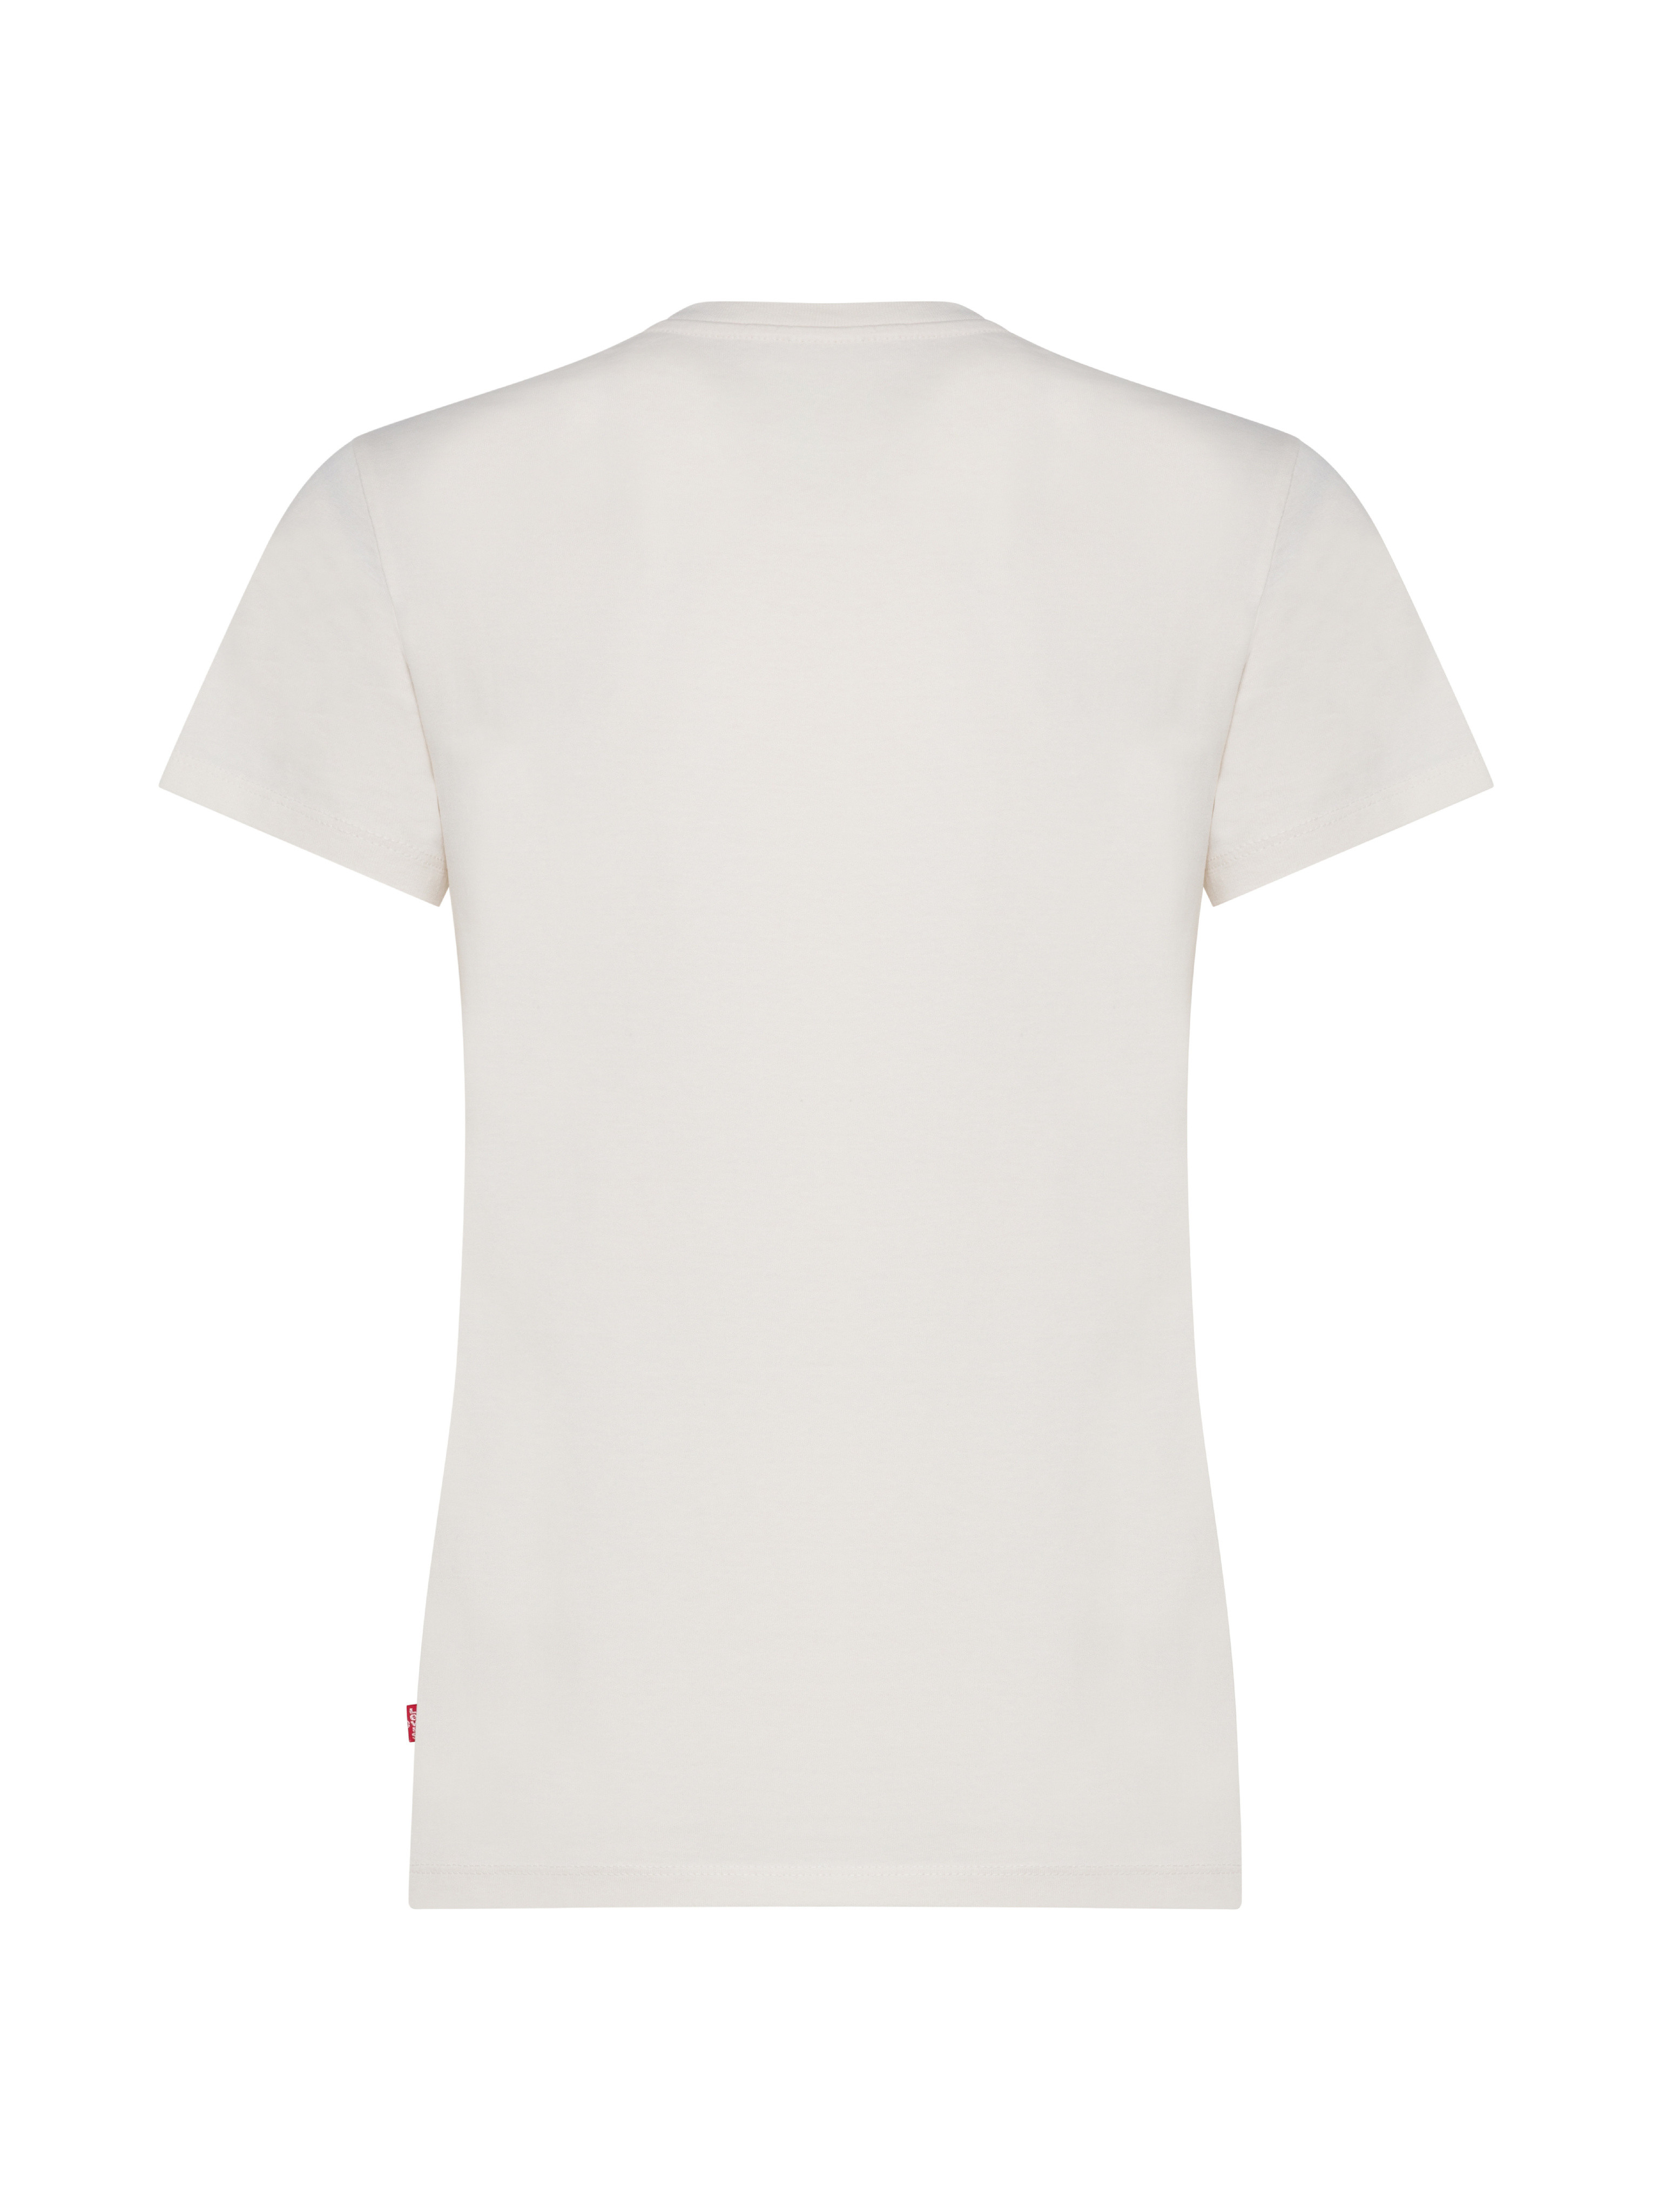 Levi's - Floral Logo T-Shirt, White, large image number 1